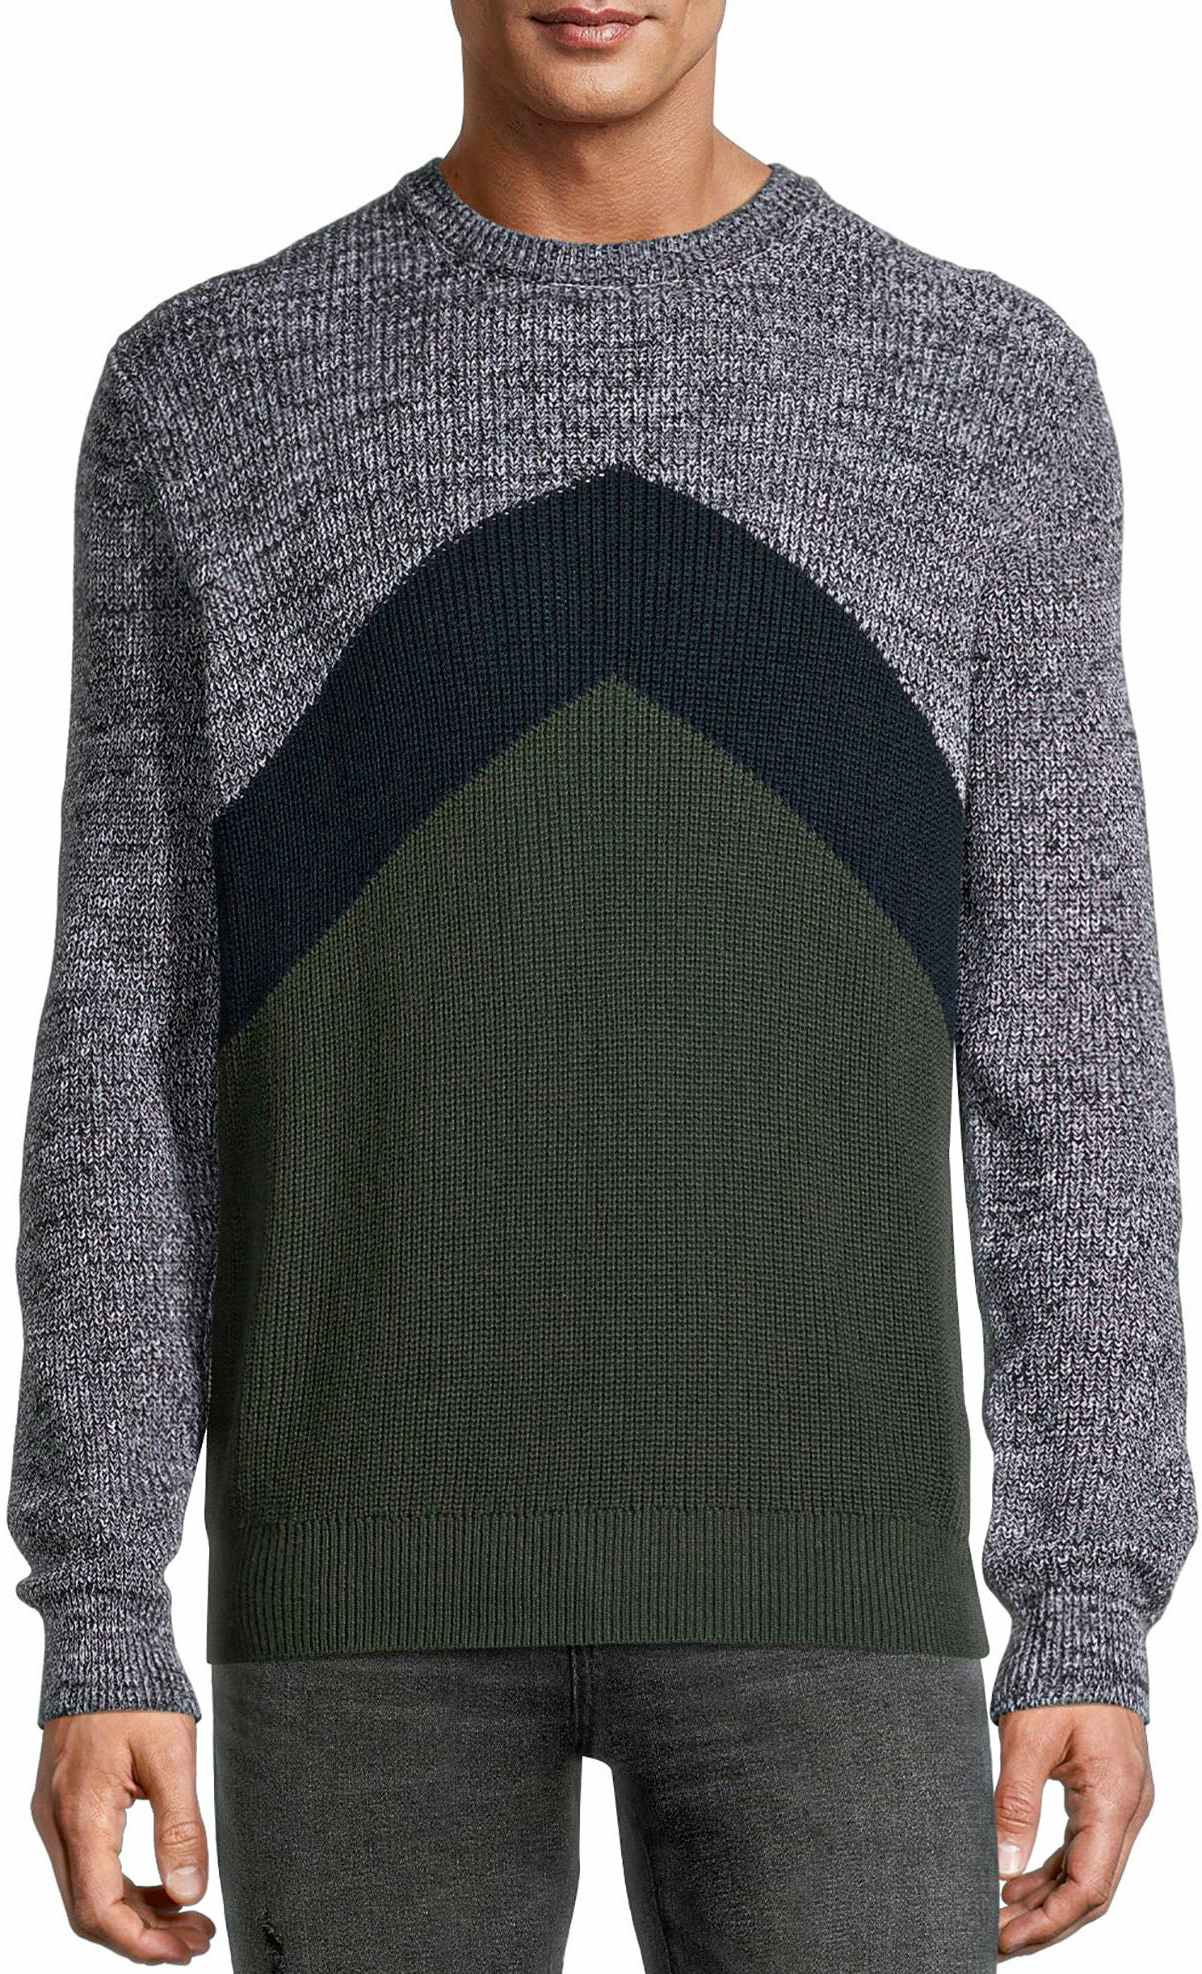 walmart-tribekka-44-striped-pullover-sweater-2022